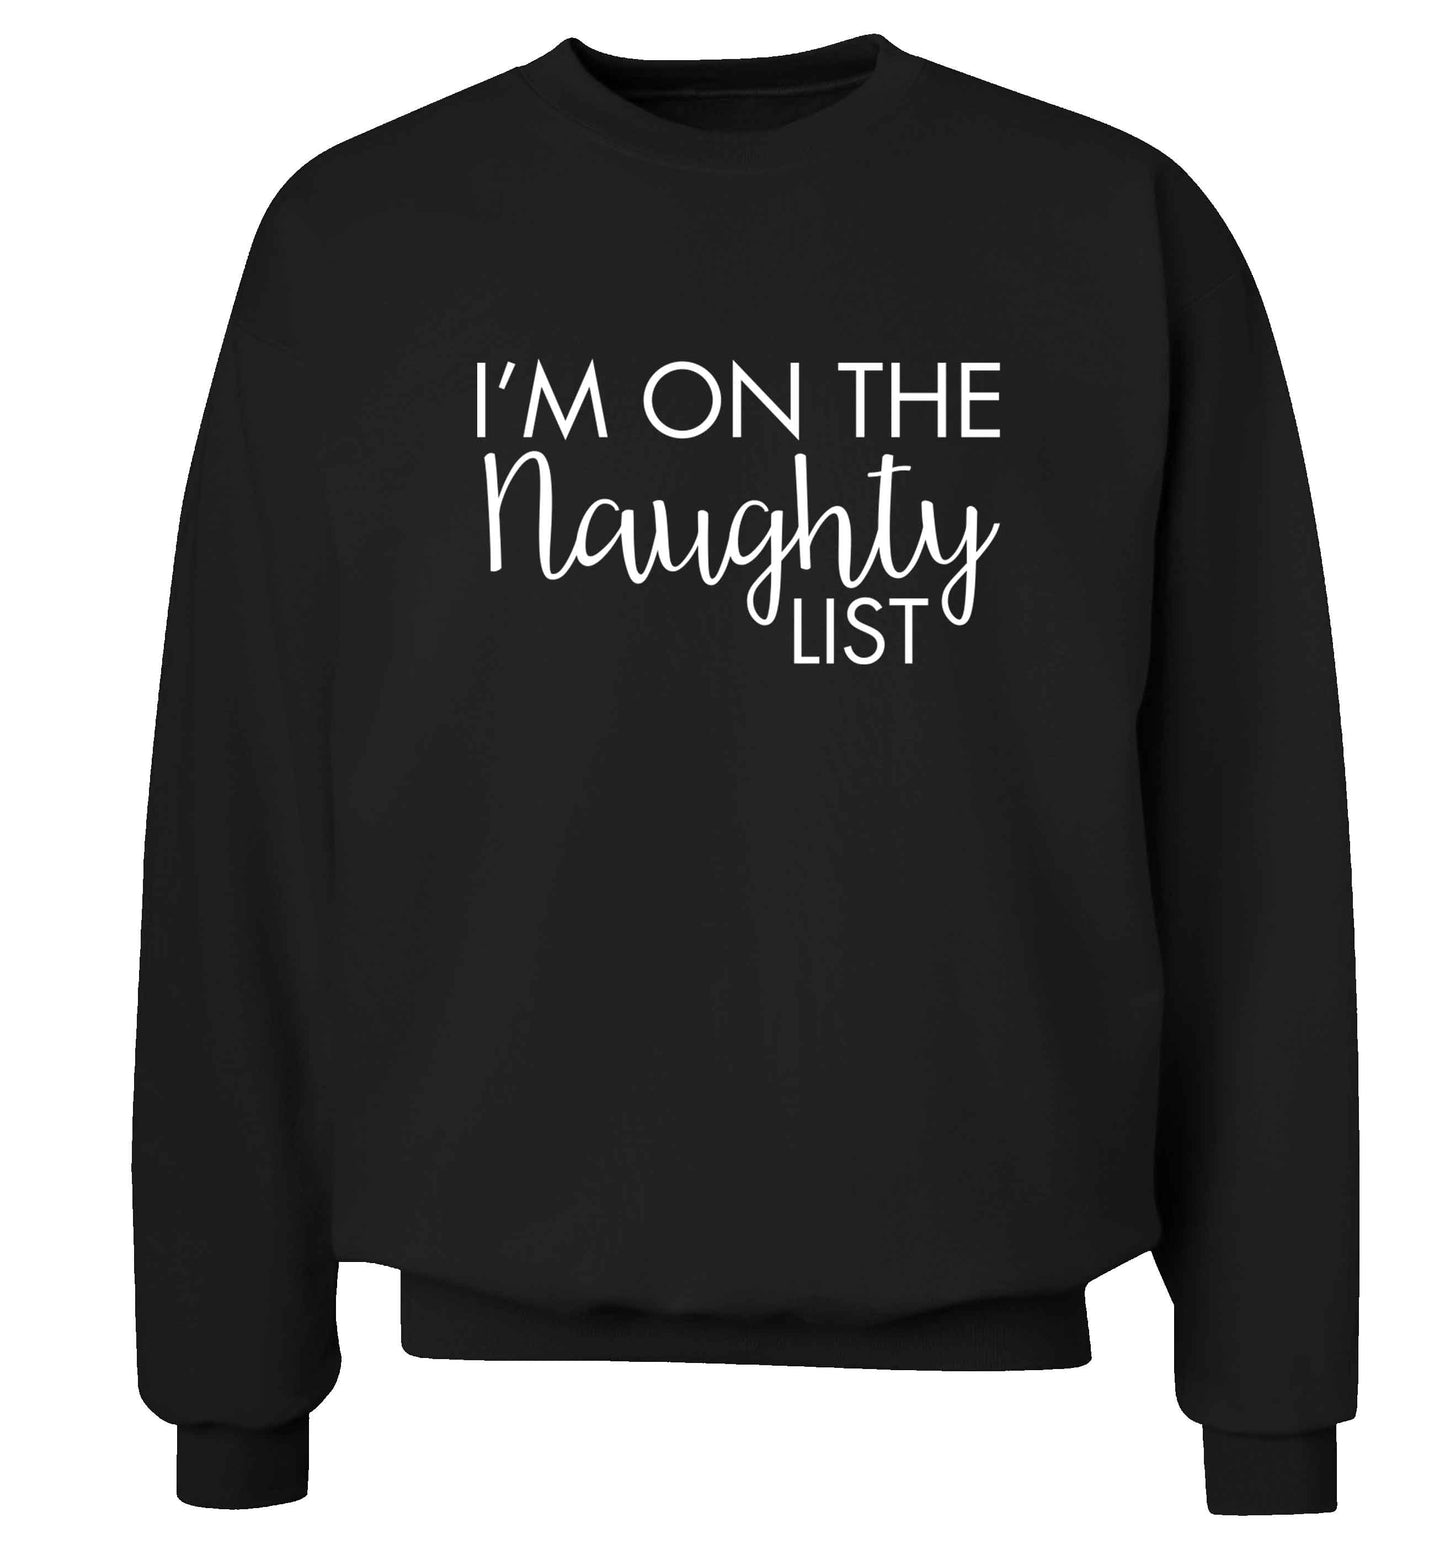 I'm on the naughty list adult's unisex black sweater 2XL